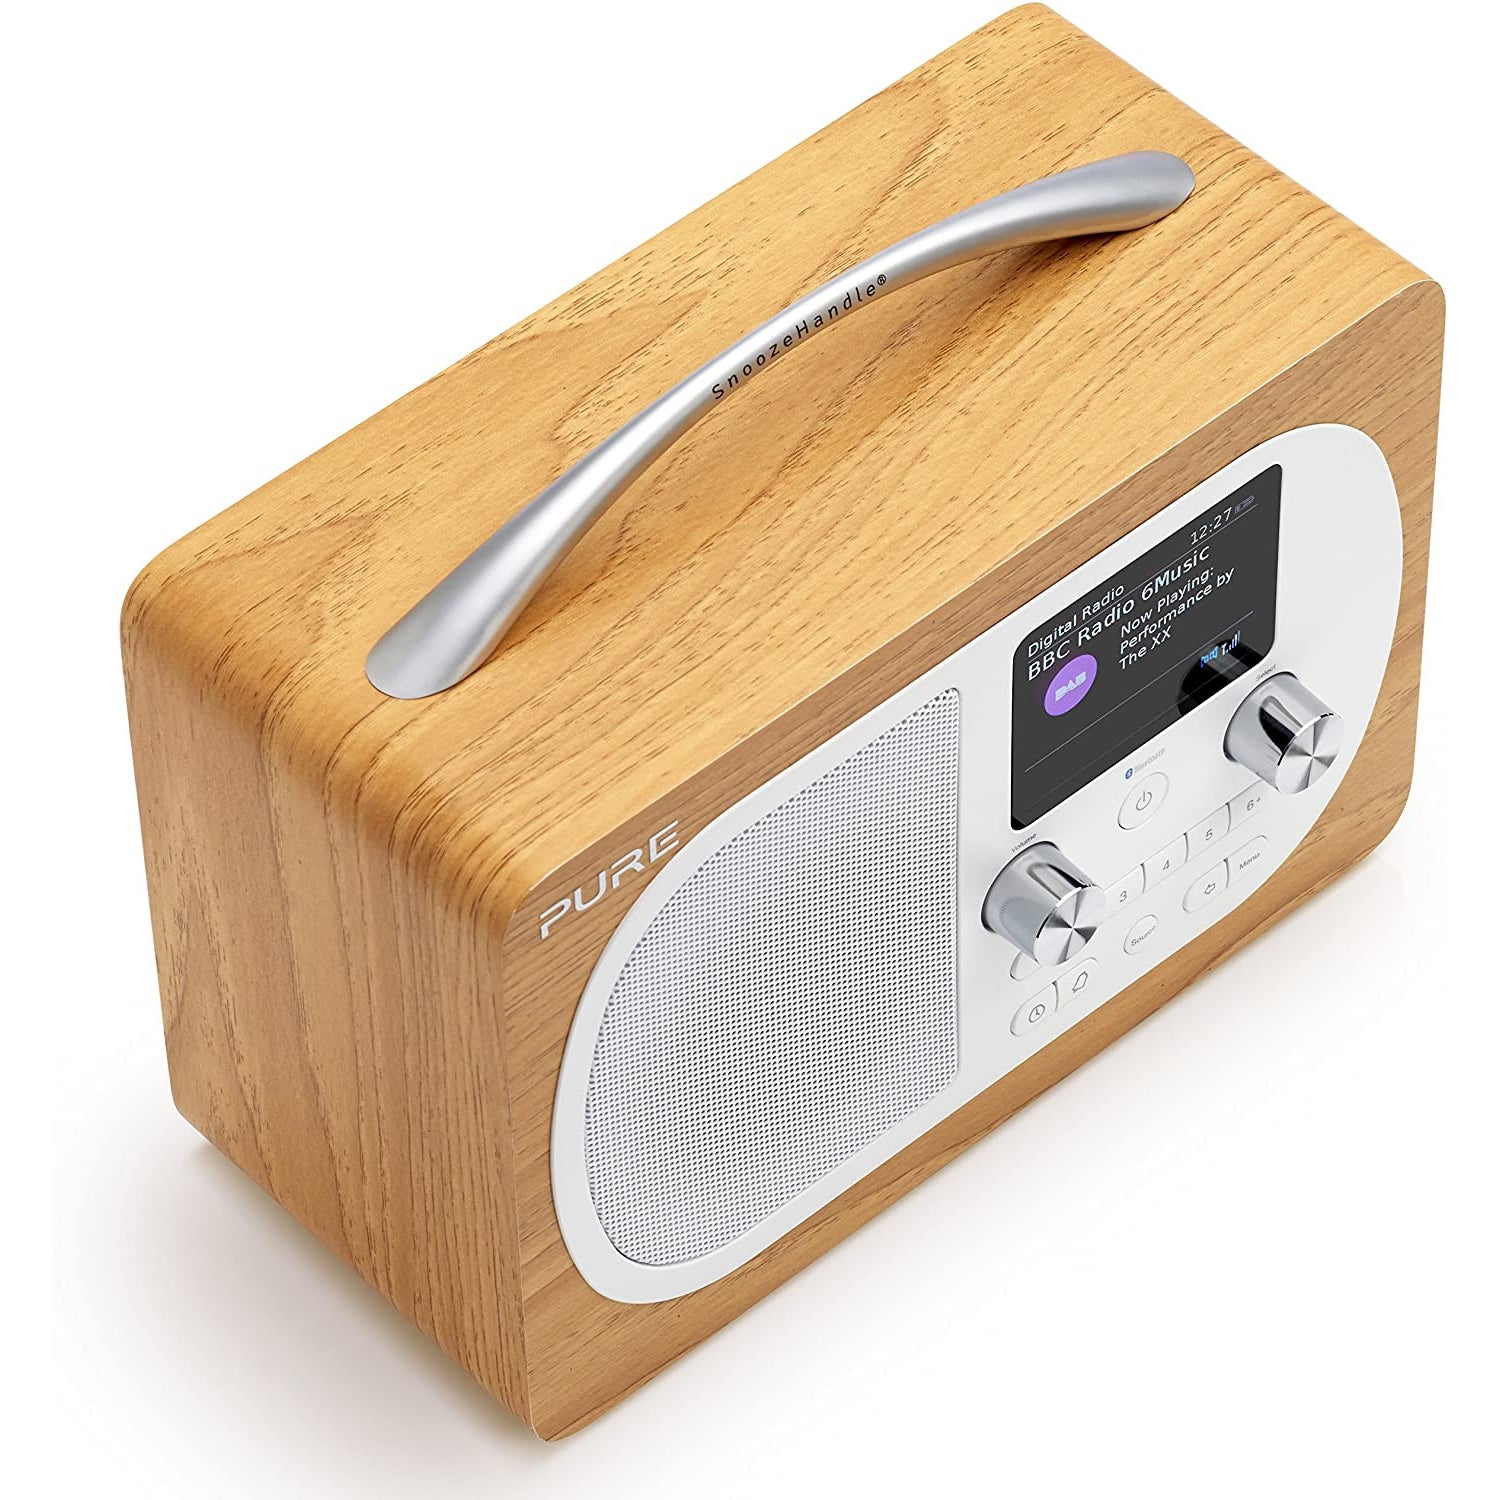 Pure Evoke H4 Portable FM/DAB+/DAB Digital Radio - Oak - Refurbished Good